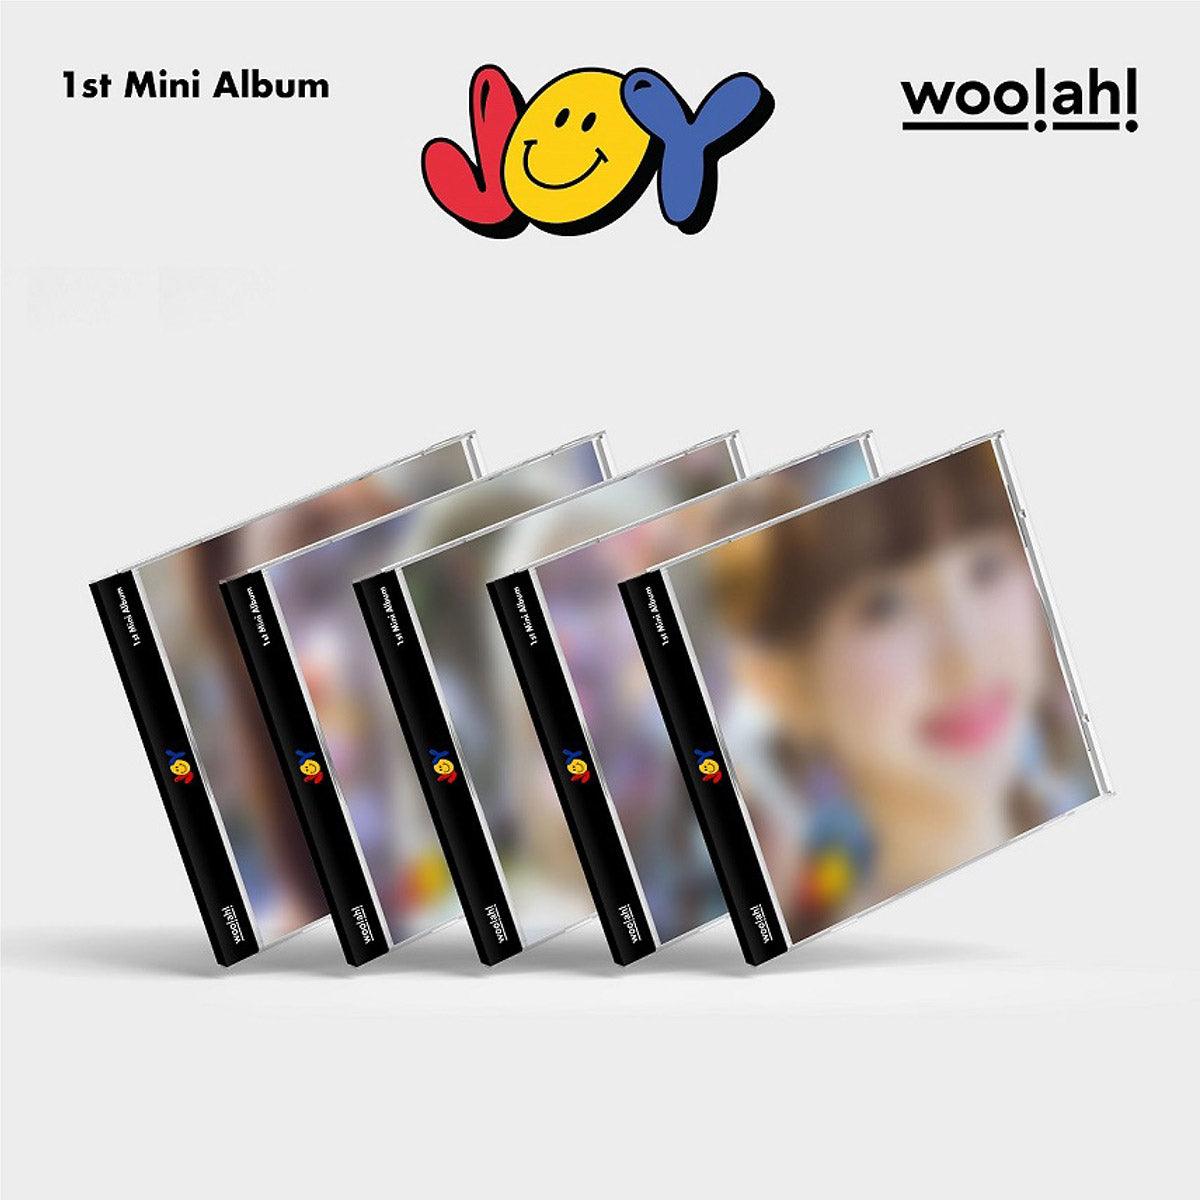 woo!ah! - 1st Mini Album [JOY] Jewel ver. Limited Edition - KAVE SQUARE